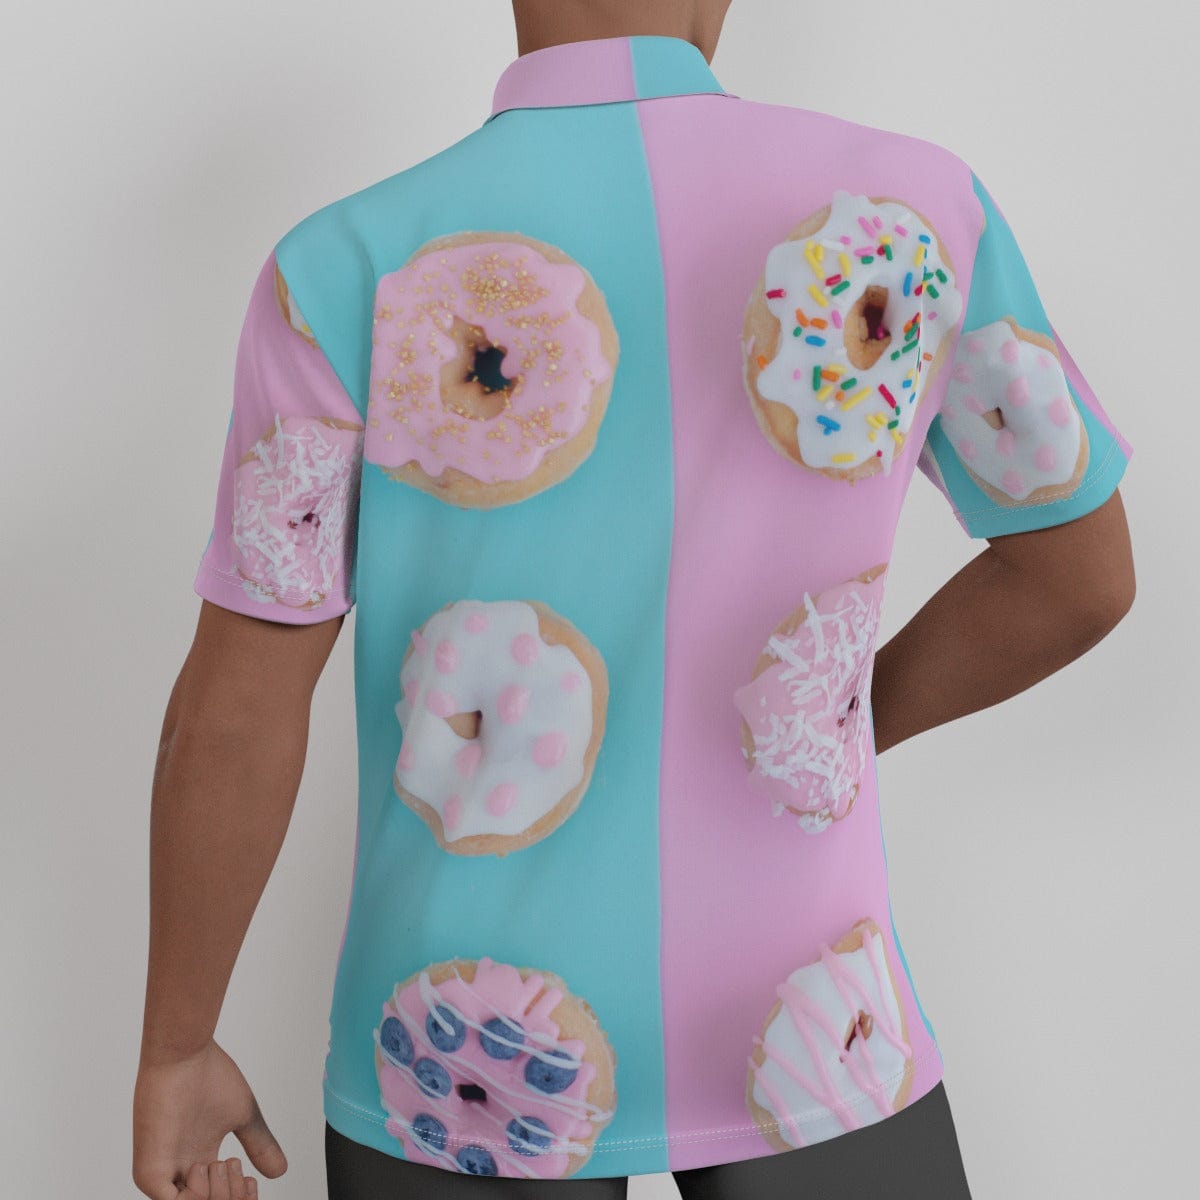 Yoycol Donut Lover's Men's Shirt